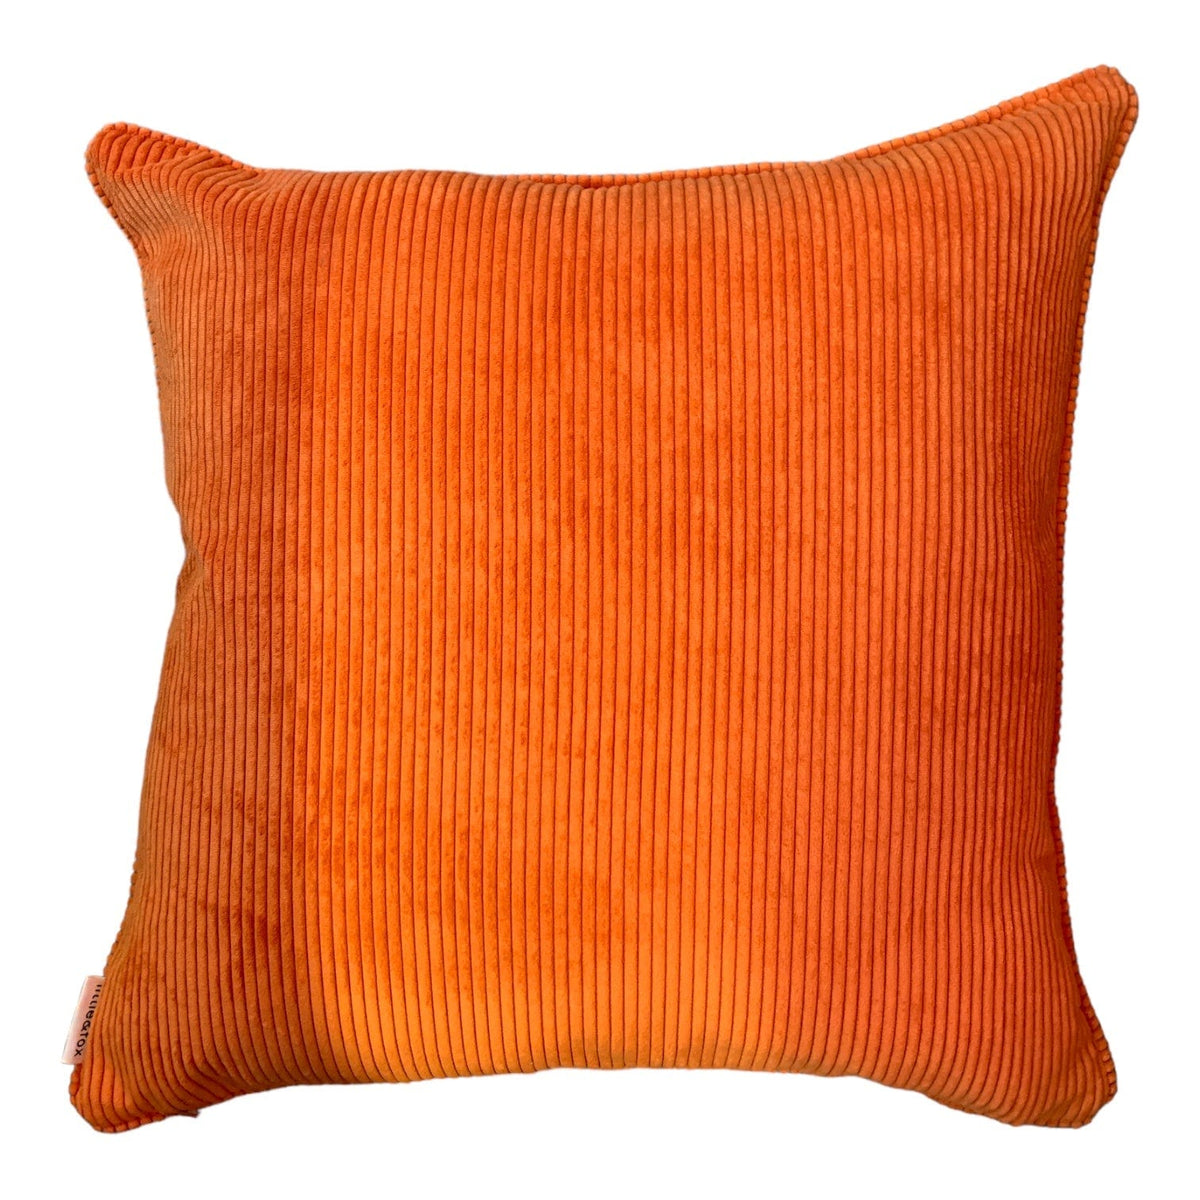 Darven Tangerine Pipped  55x55cm cushion little and fox.jpg